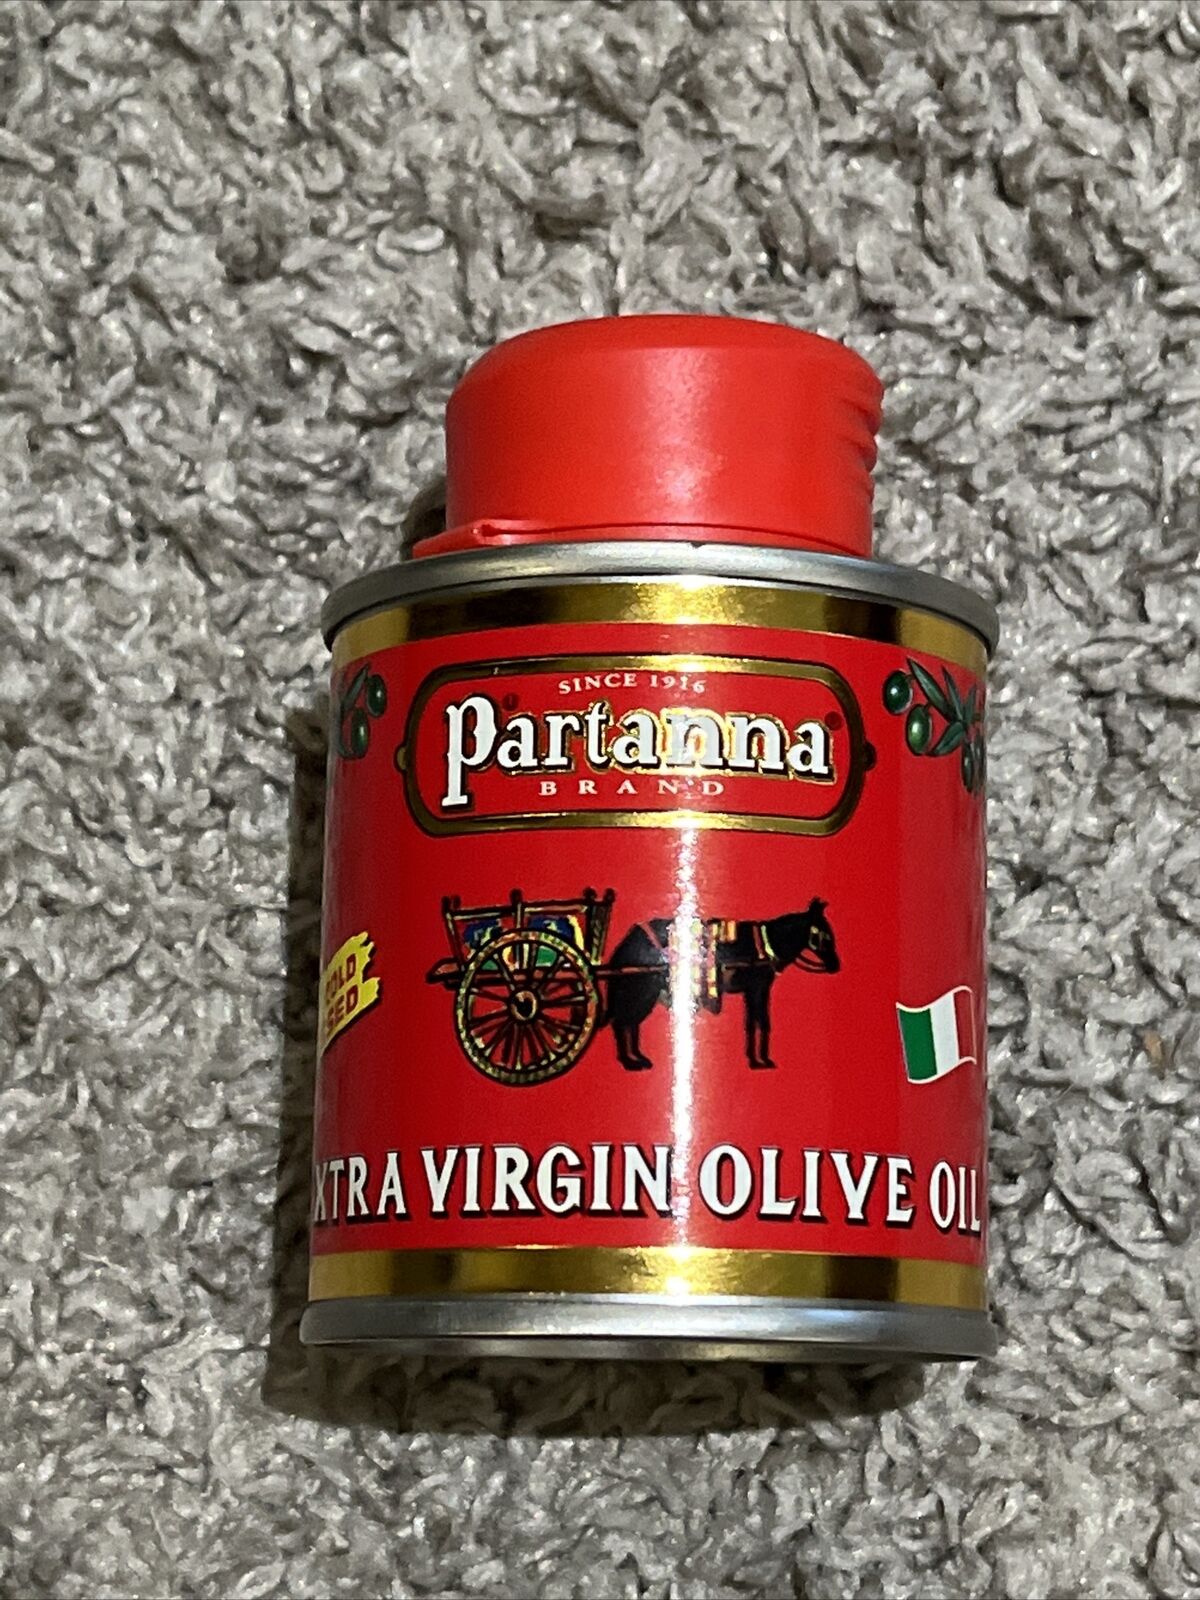 Starbucks Partanna Olive Oil 3.38 Oz. New Product